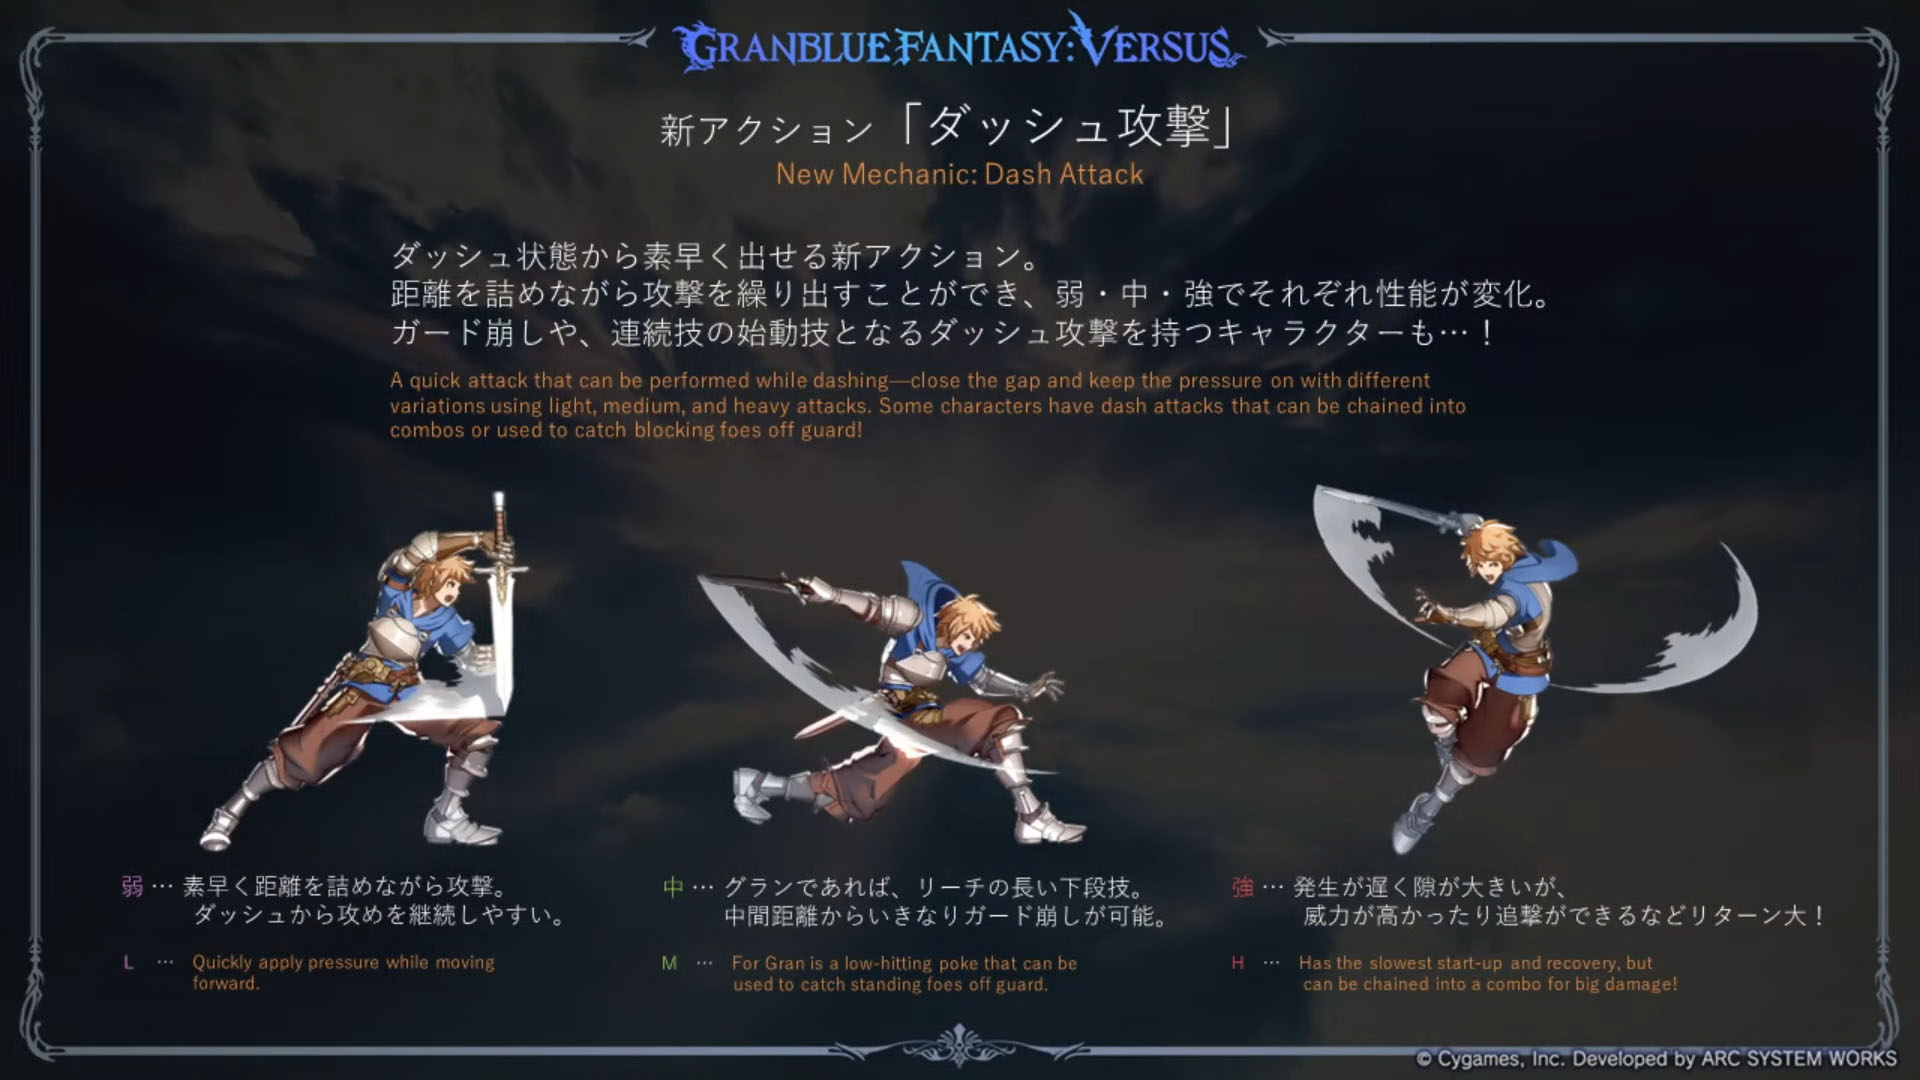 Granblue Fantasy Versus: Rising Reveals Anila as Playable